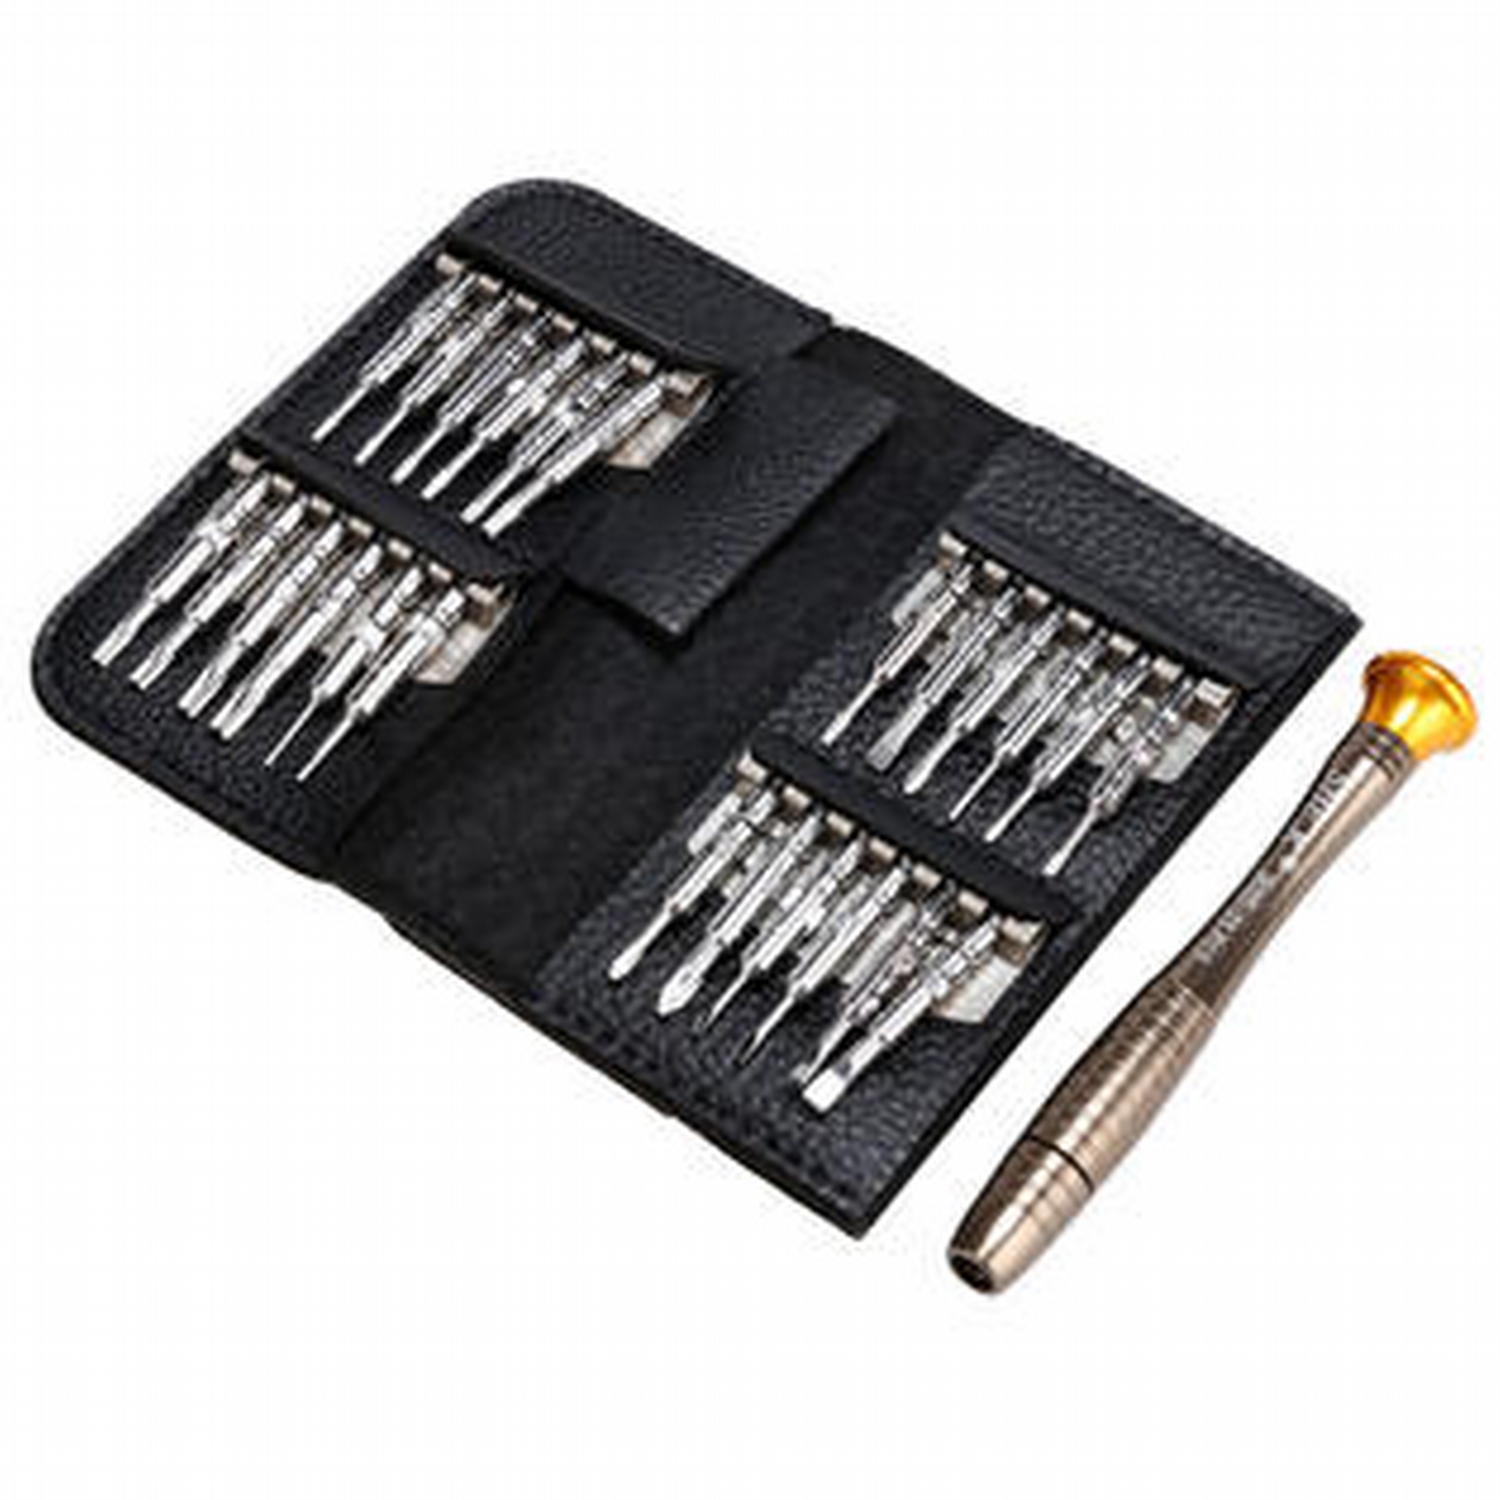 Bestselling Practical Screwdriver Portable 25 Pieces Repair Tool Kit ...